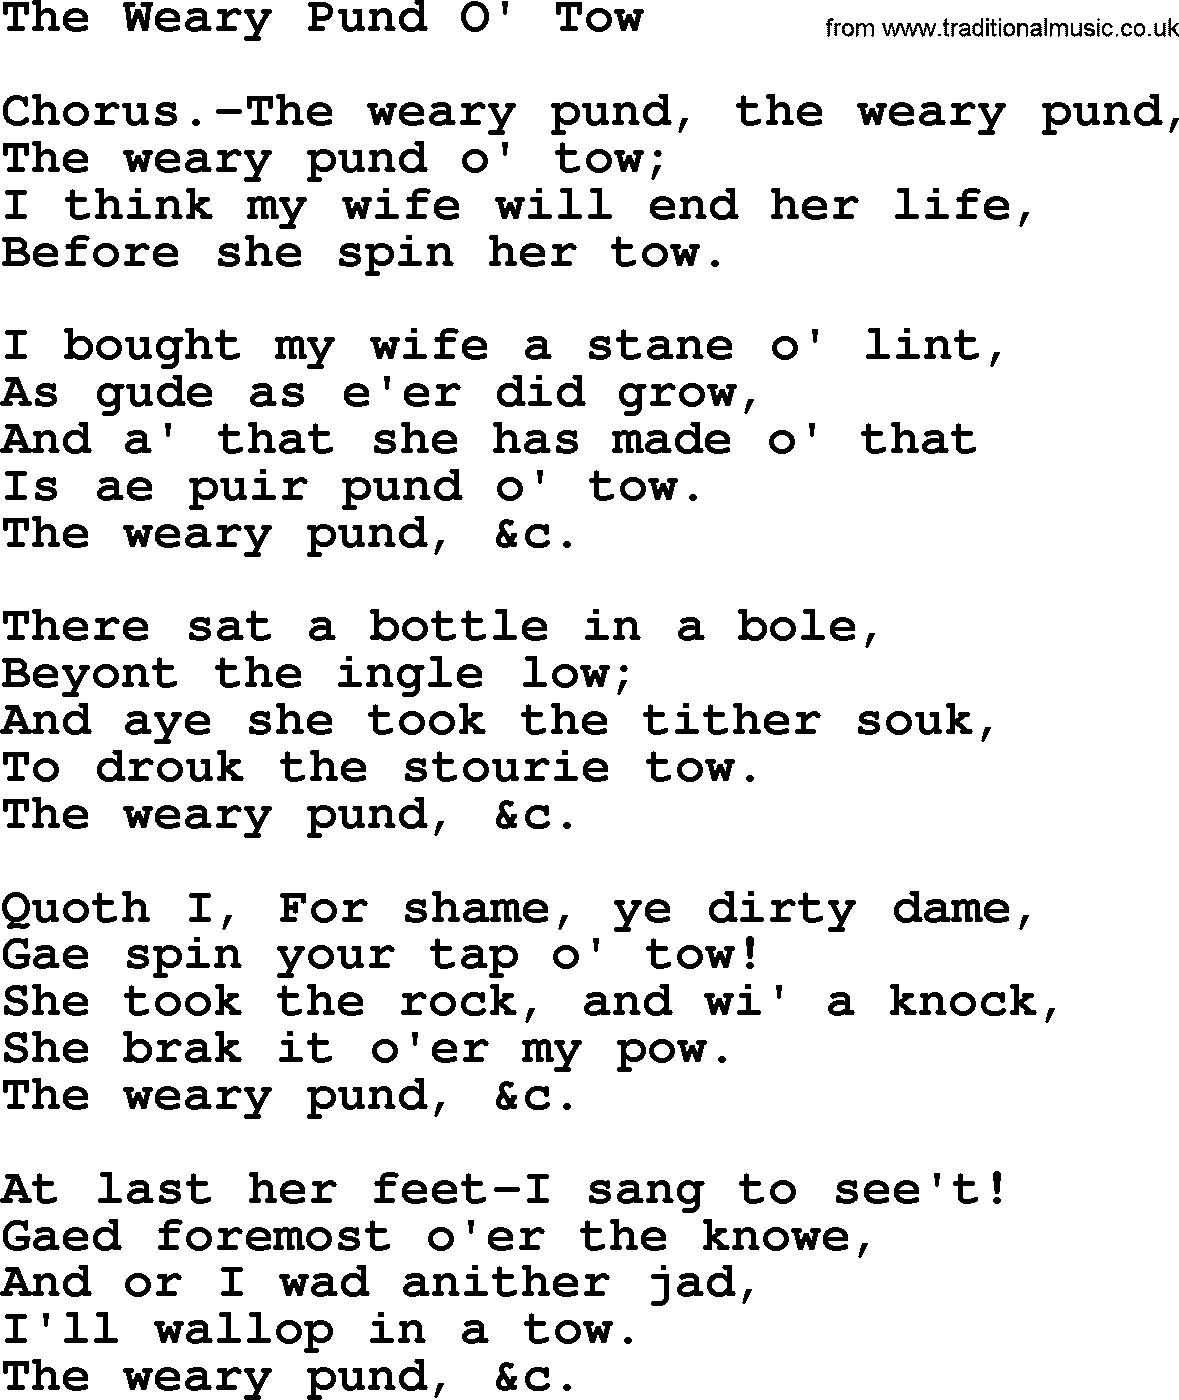 Robert Burns Songs & Lyrics: The Weary Pund O' Tow